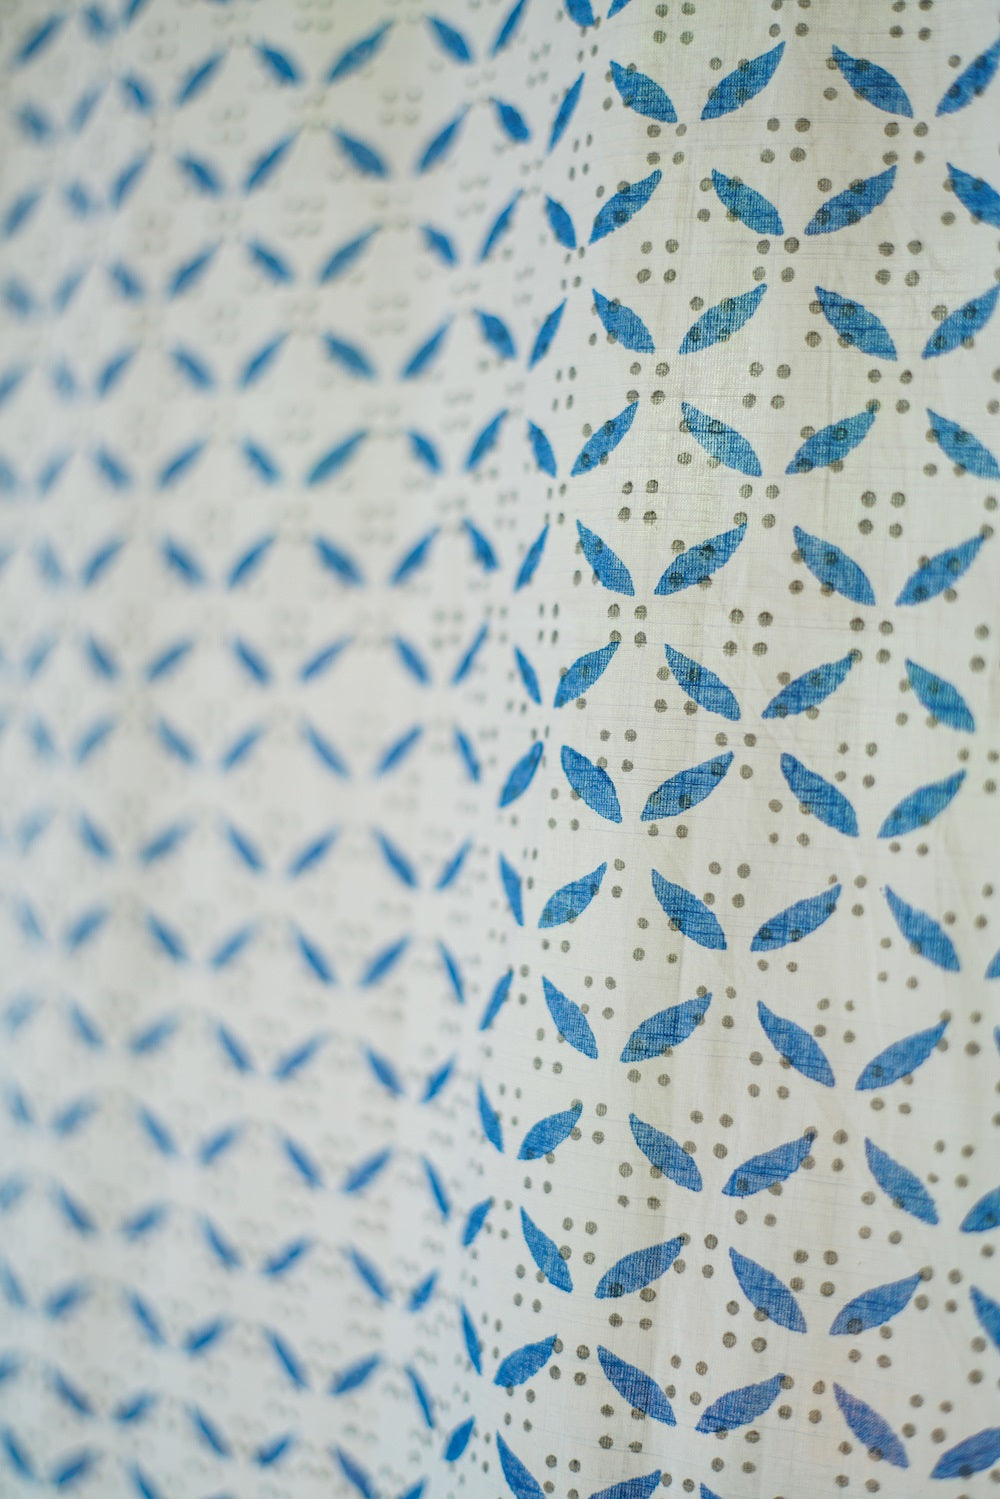 Prakruti Blue Blockprinted Floral Window Curtain